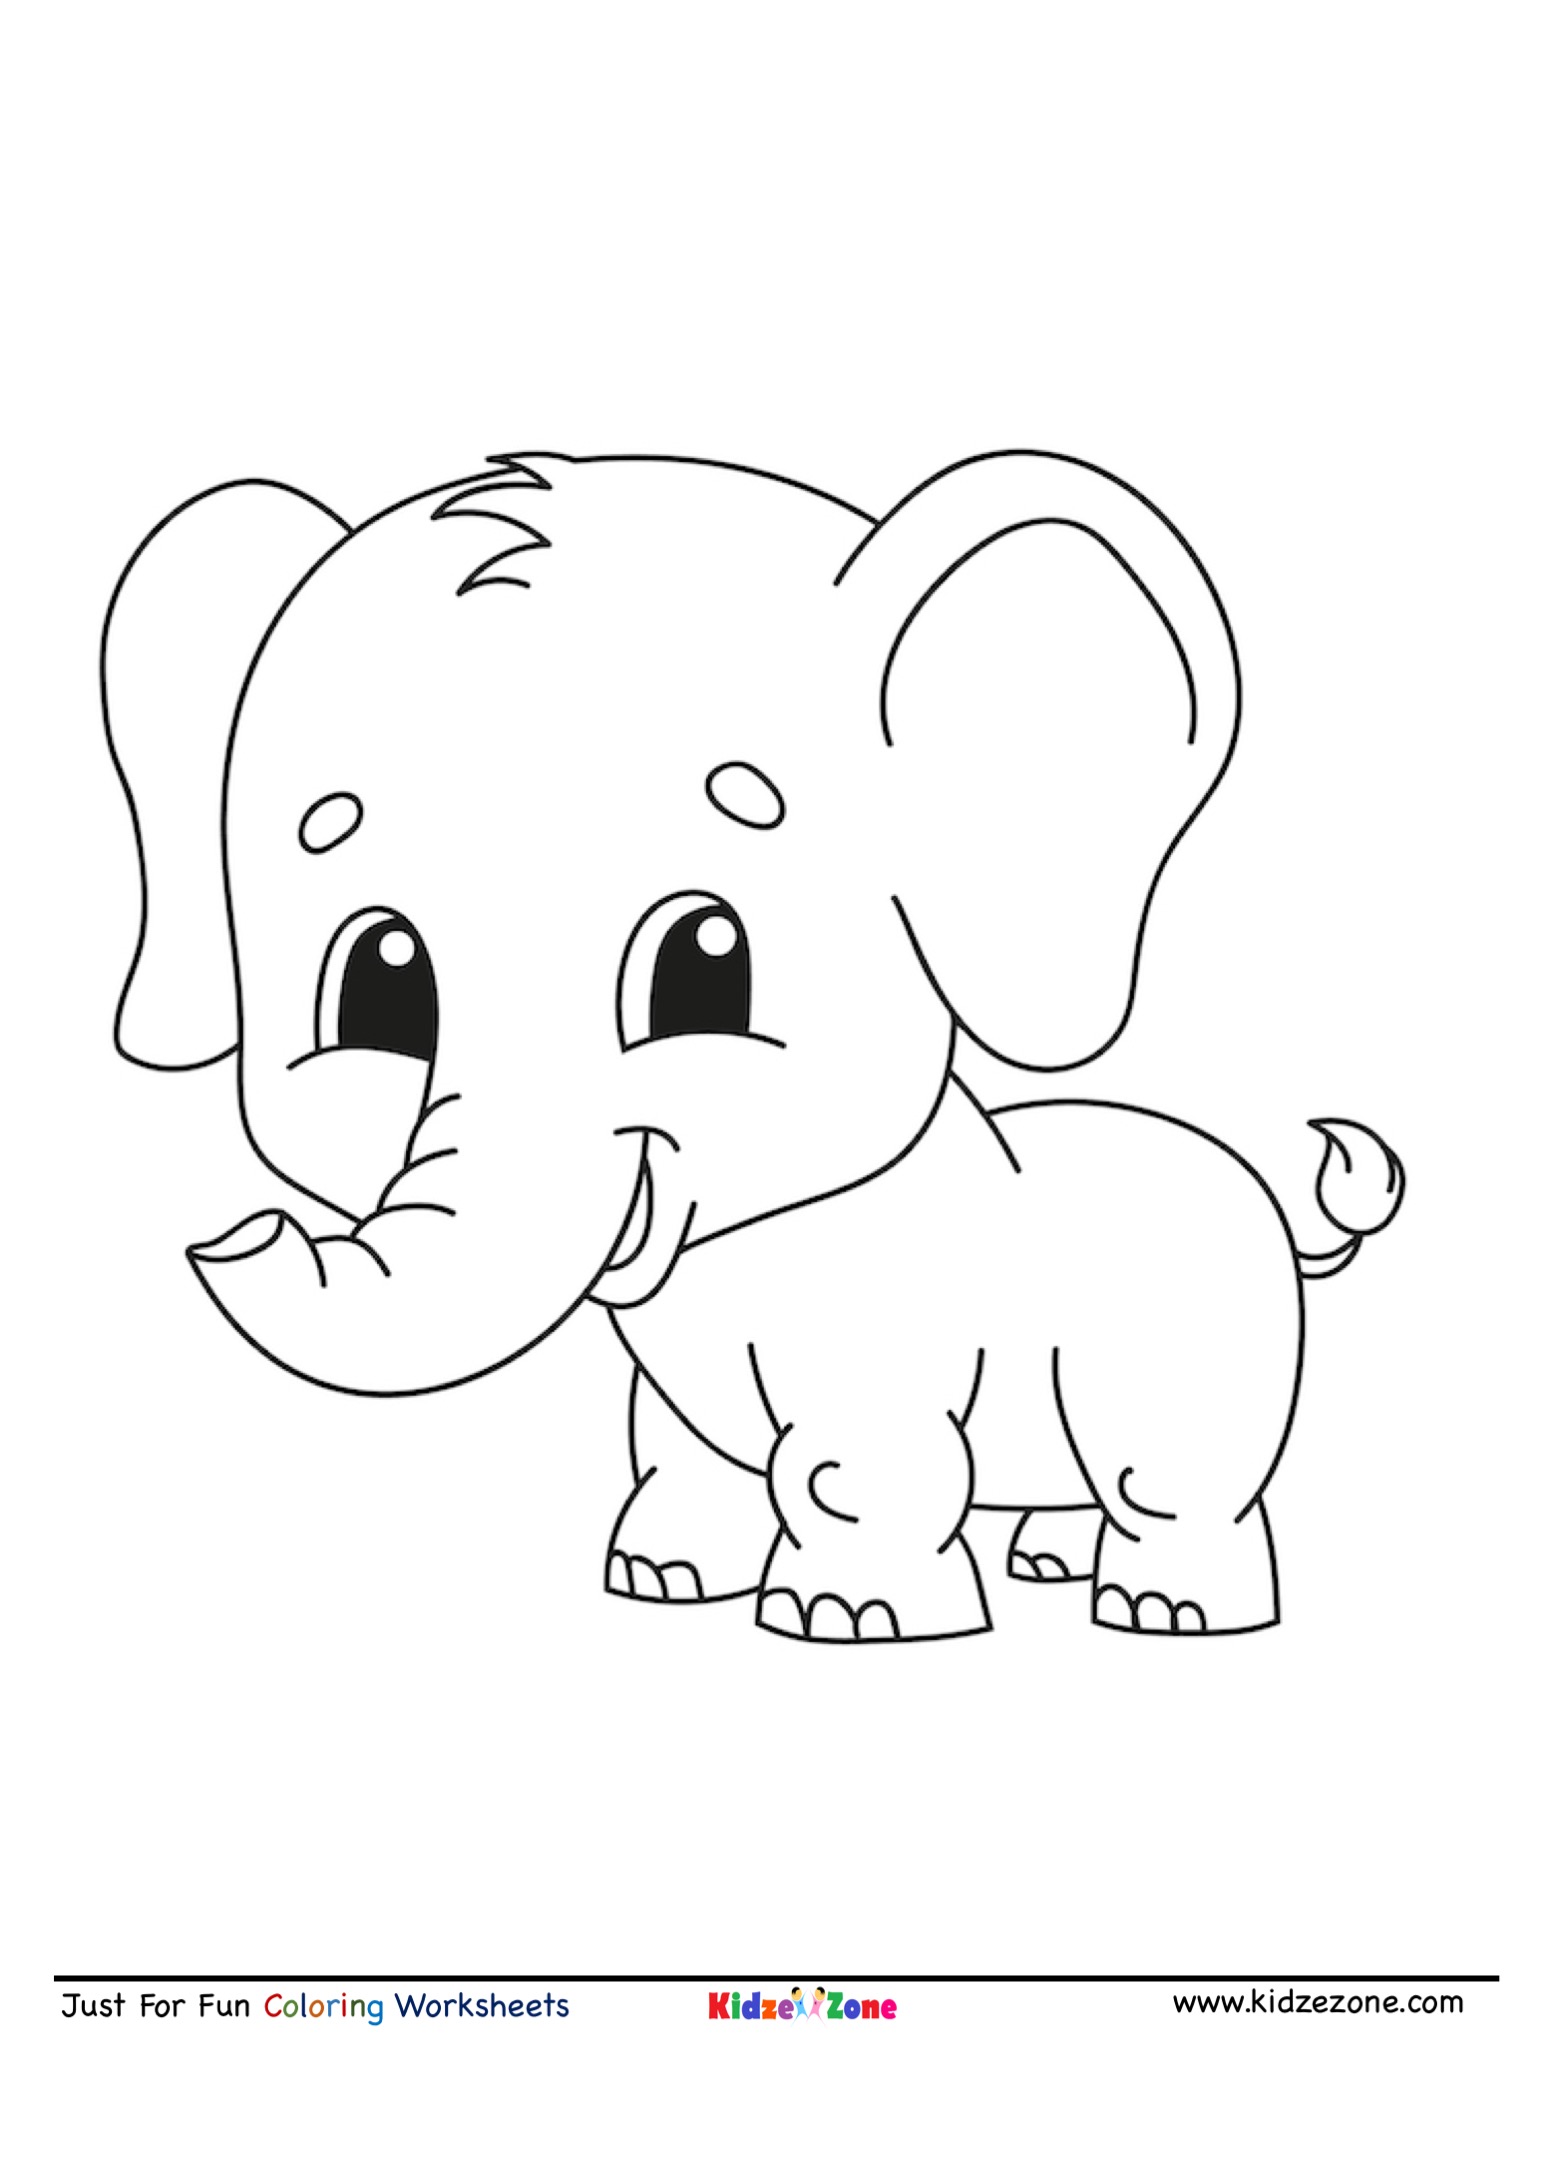 Baby Elephant cartoon coloring page   KidzeZone